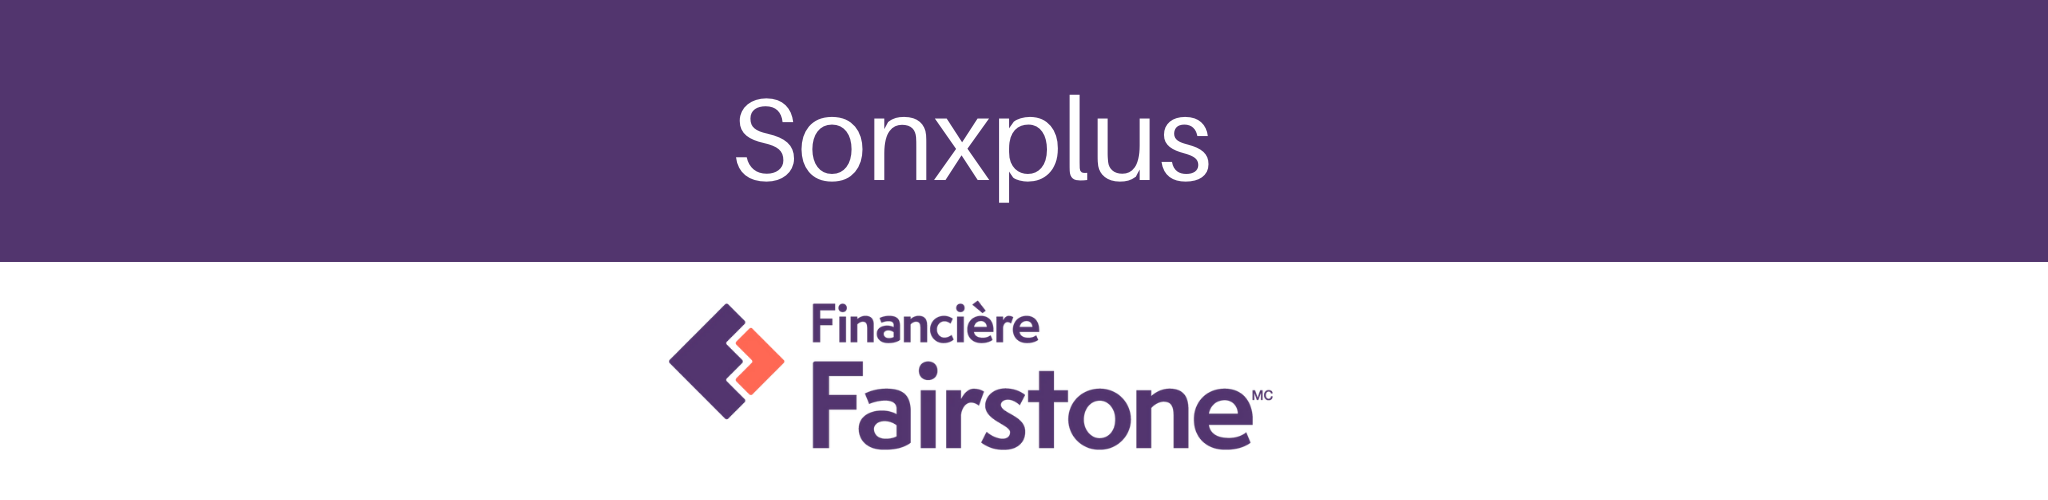 Fairstone financing | Sonxplus Rockland